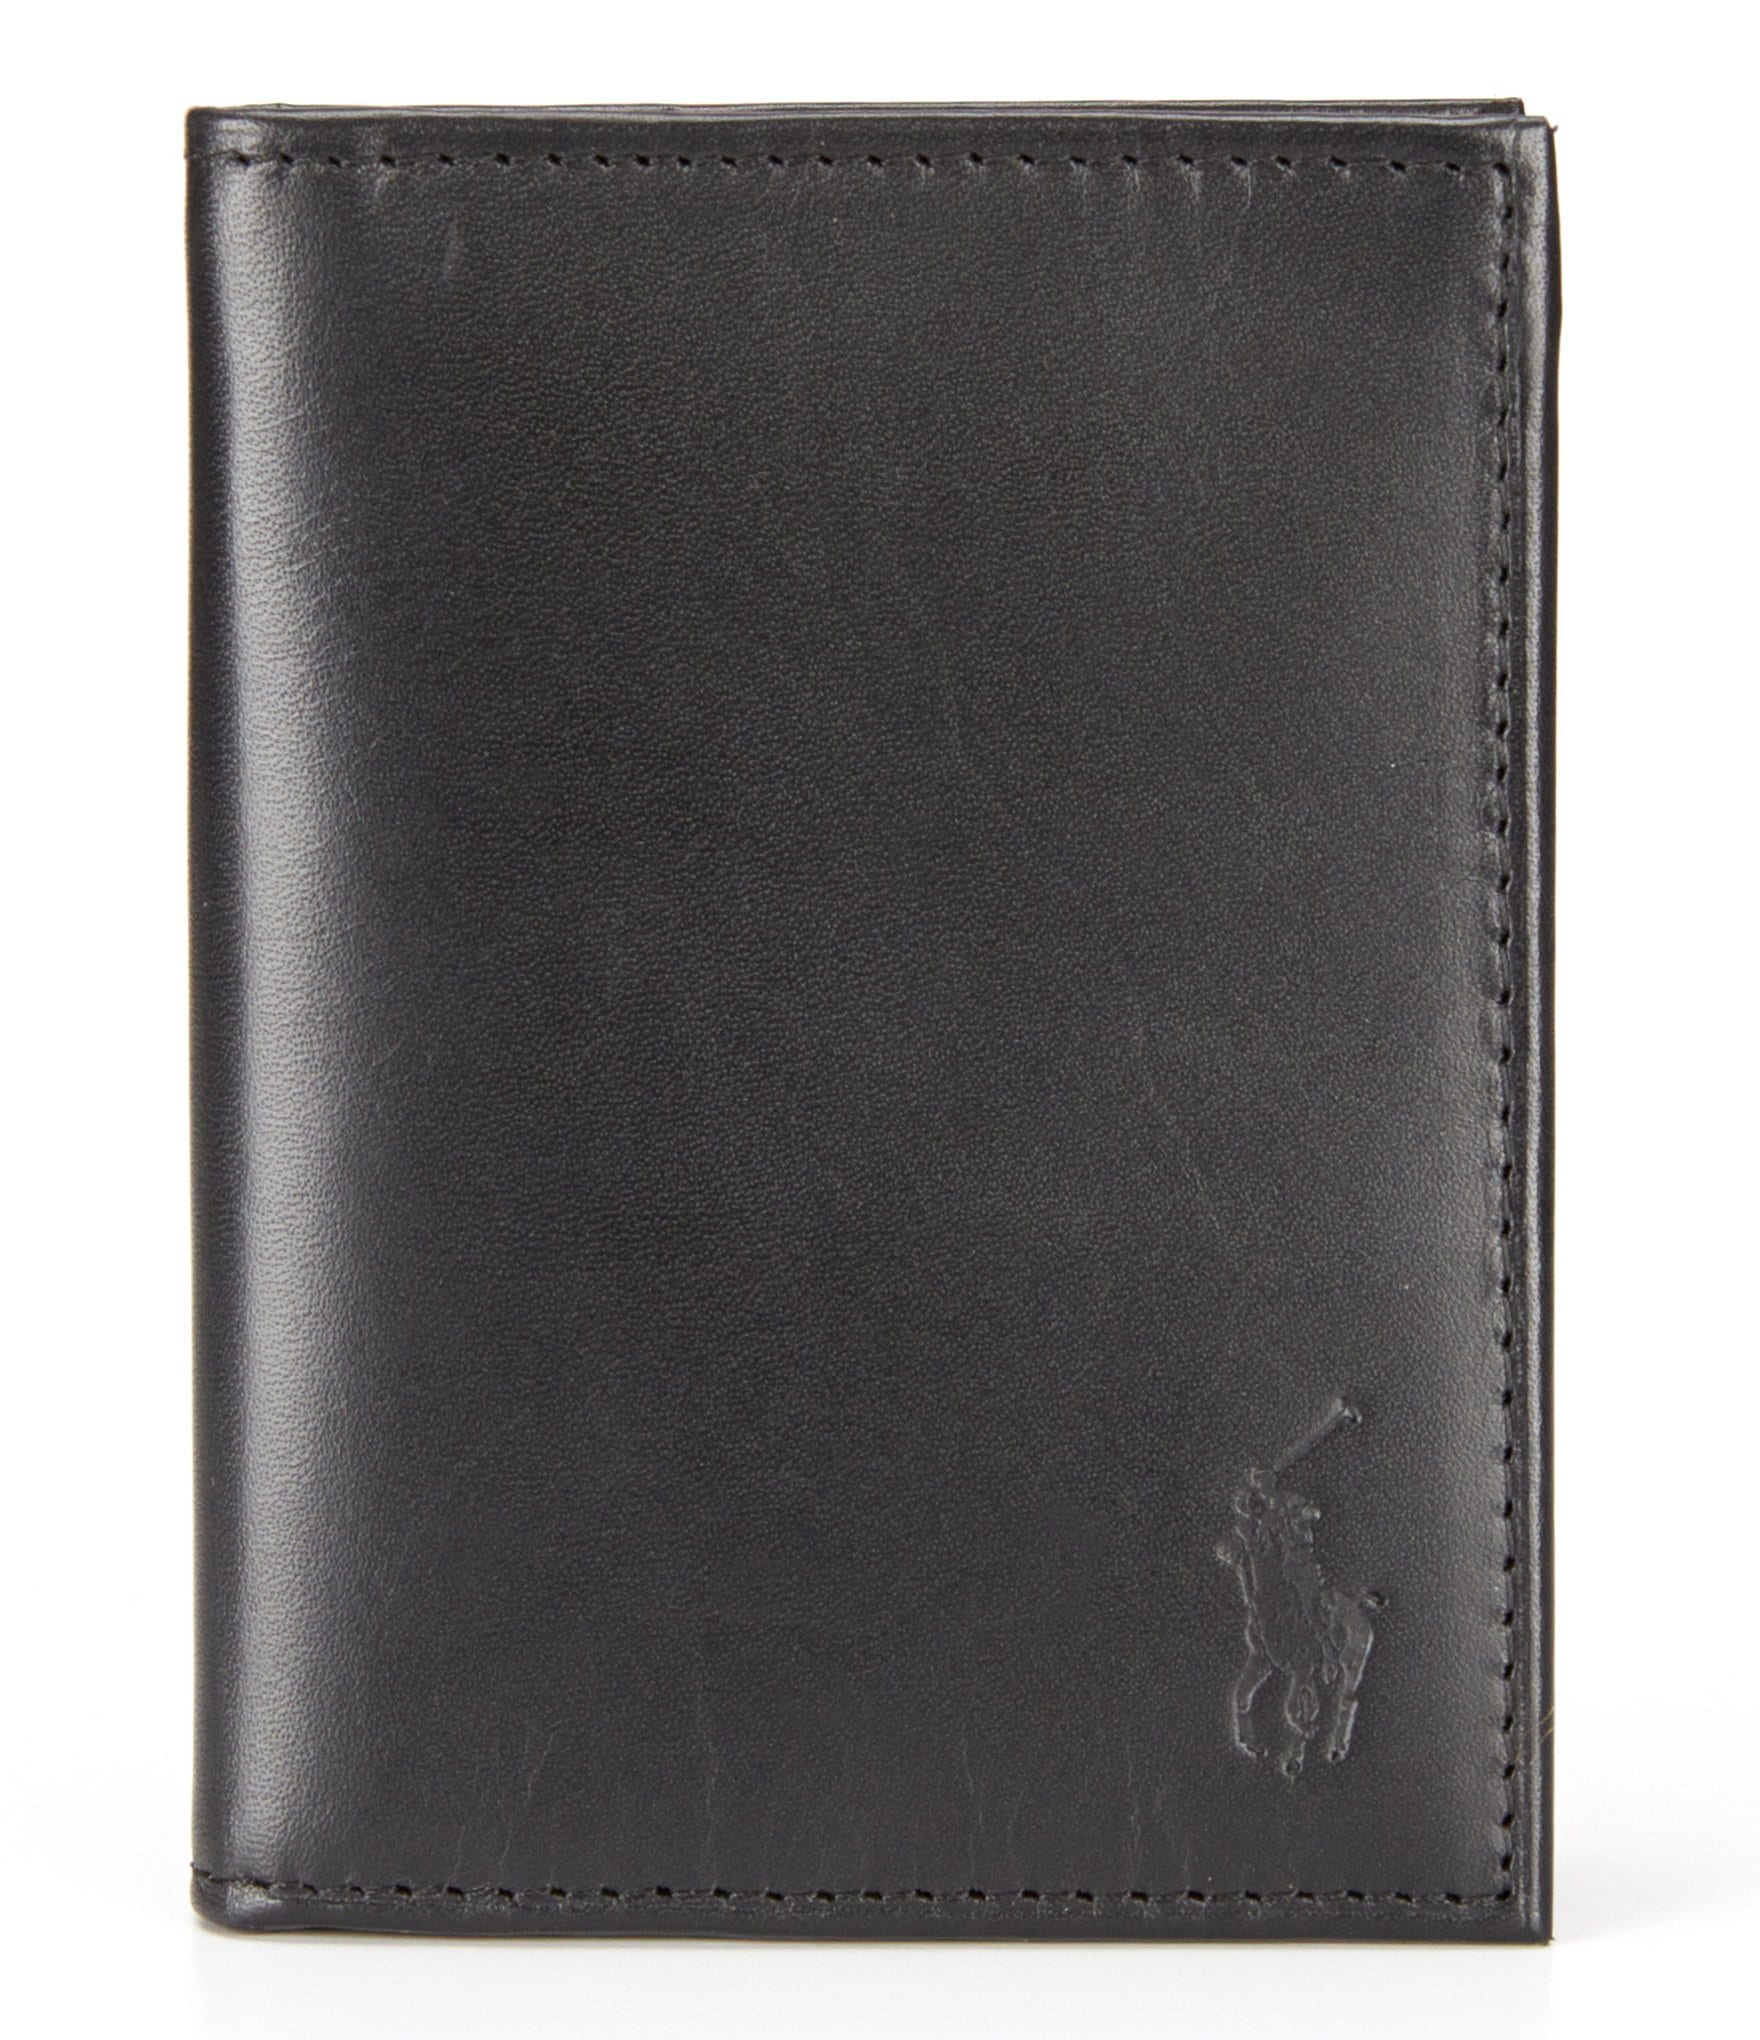 Polo Ralph Lauren Mens Trifold Leather Wallet Black | NAR Media Kit